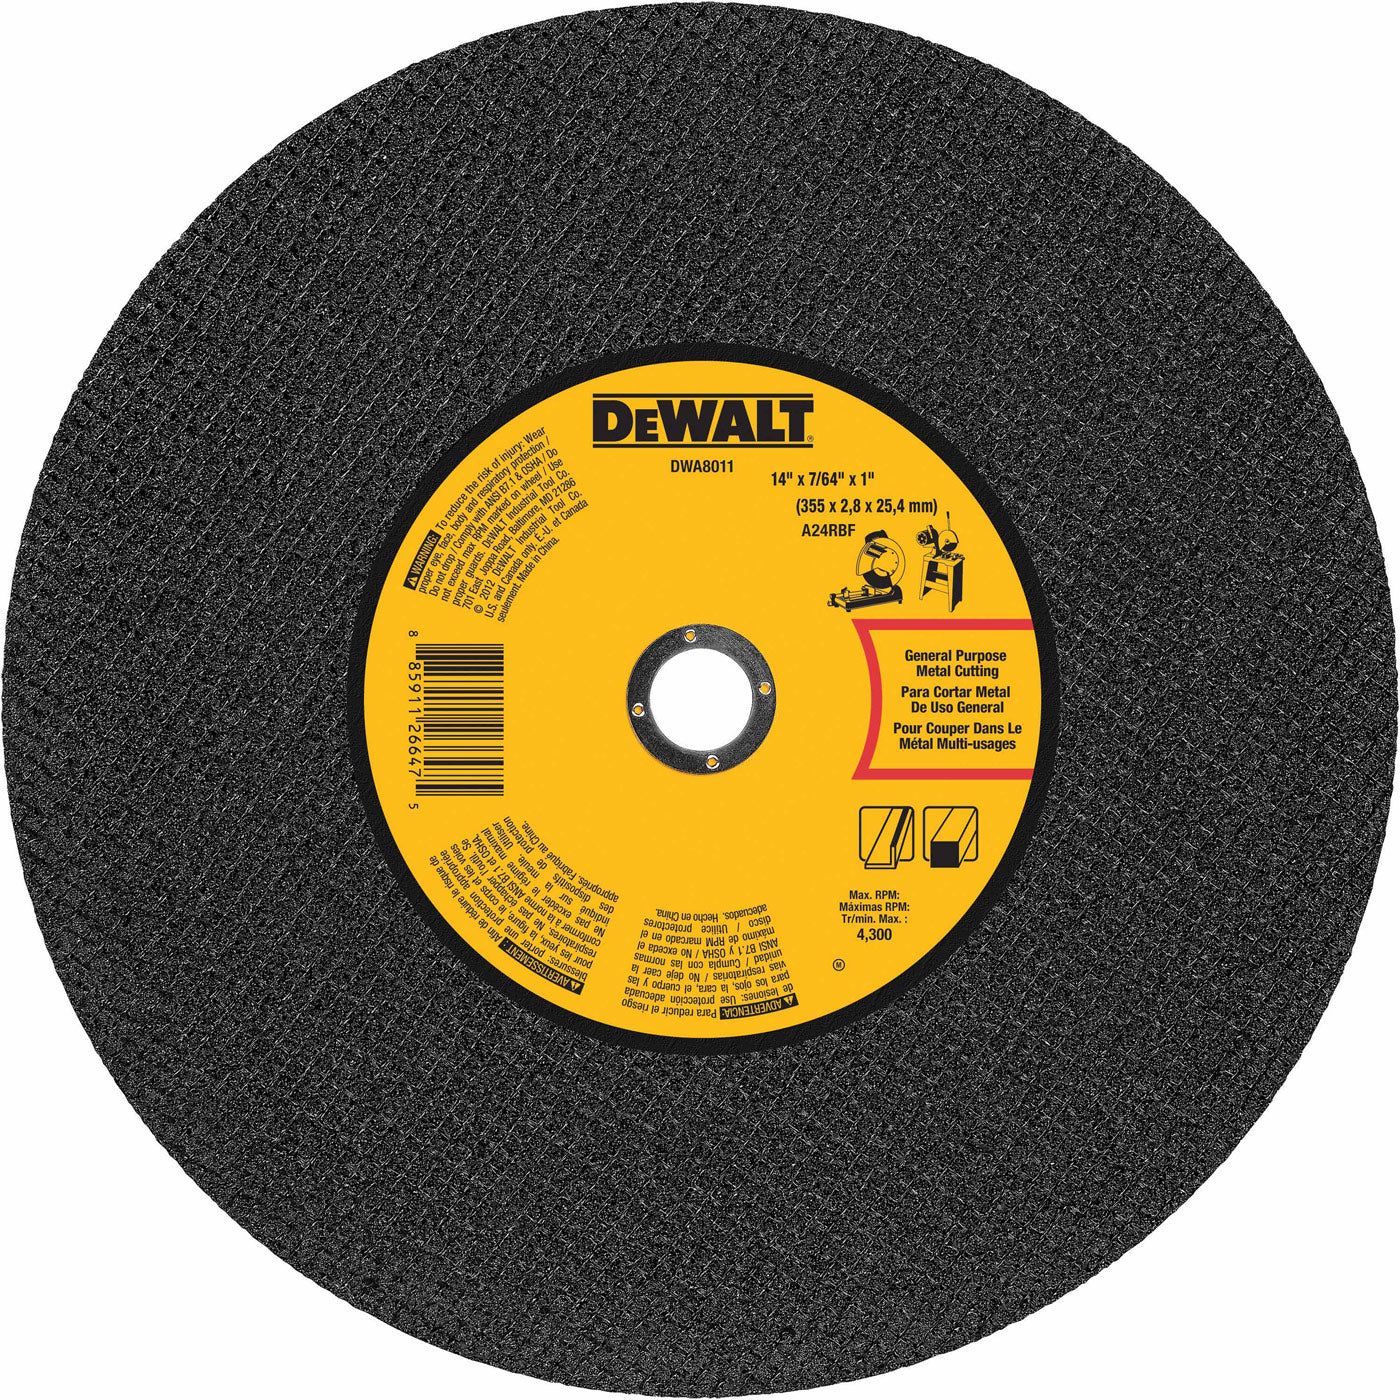 DeWalt DWA8011 14" x 7/64" x 1" General Purpose Chop Saw Wheel-Metal